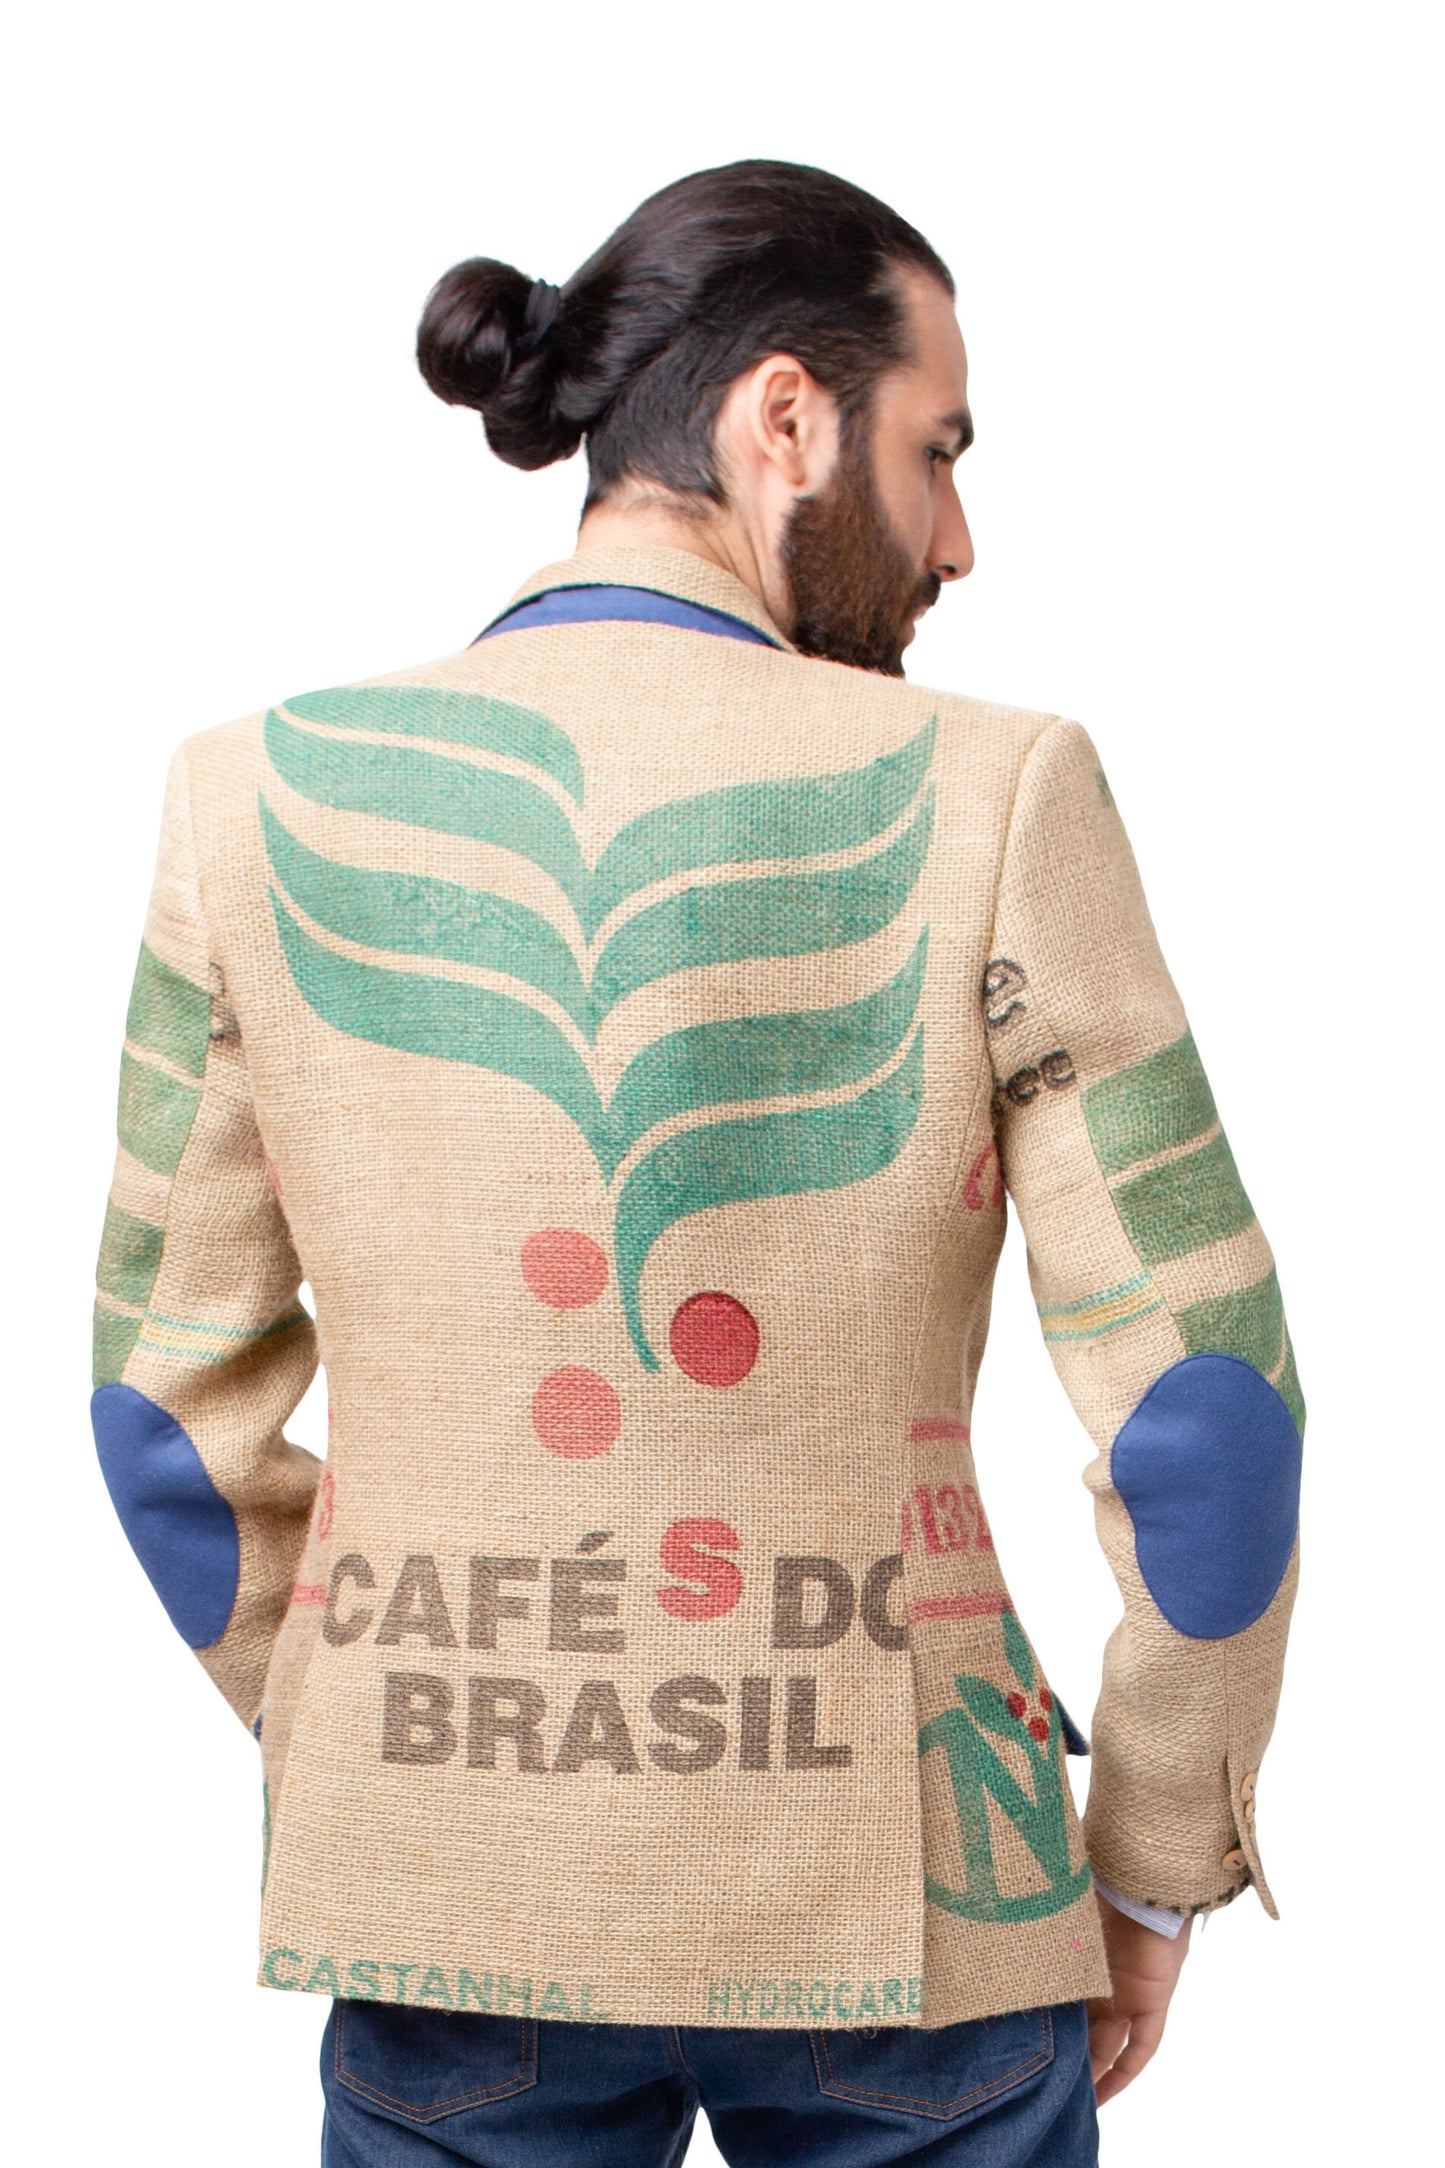 Sustainable luxury fashion piece for gentlemen made from Brazilian coffee sacks